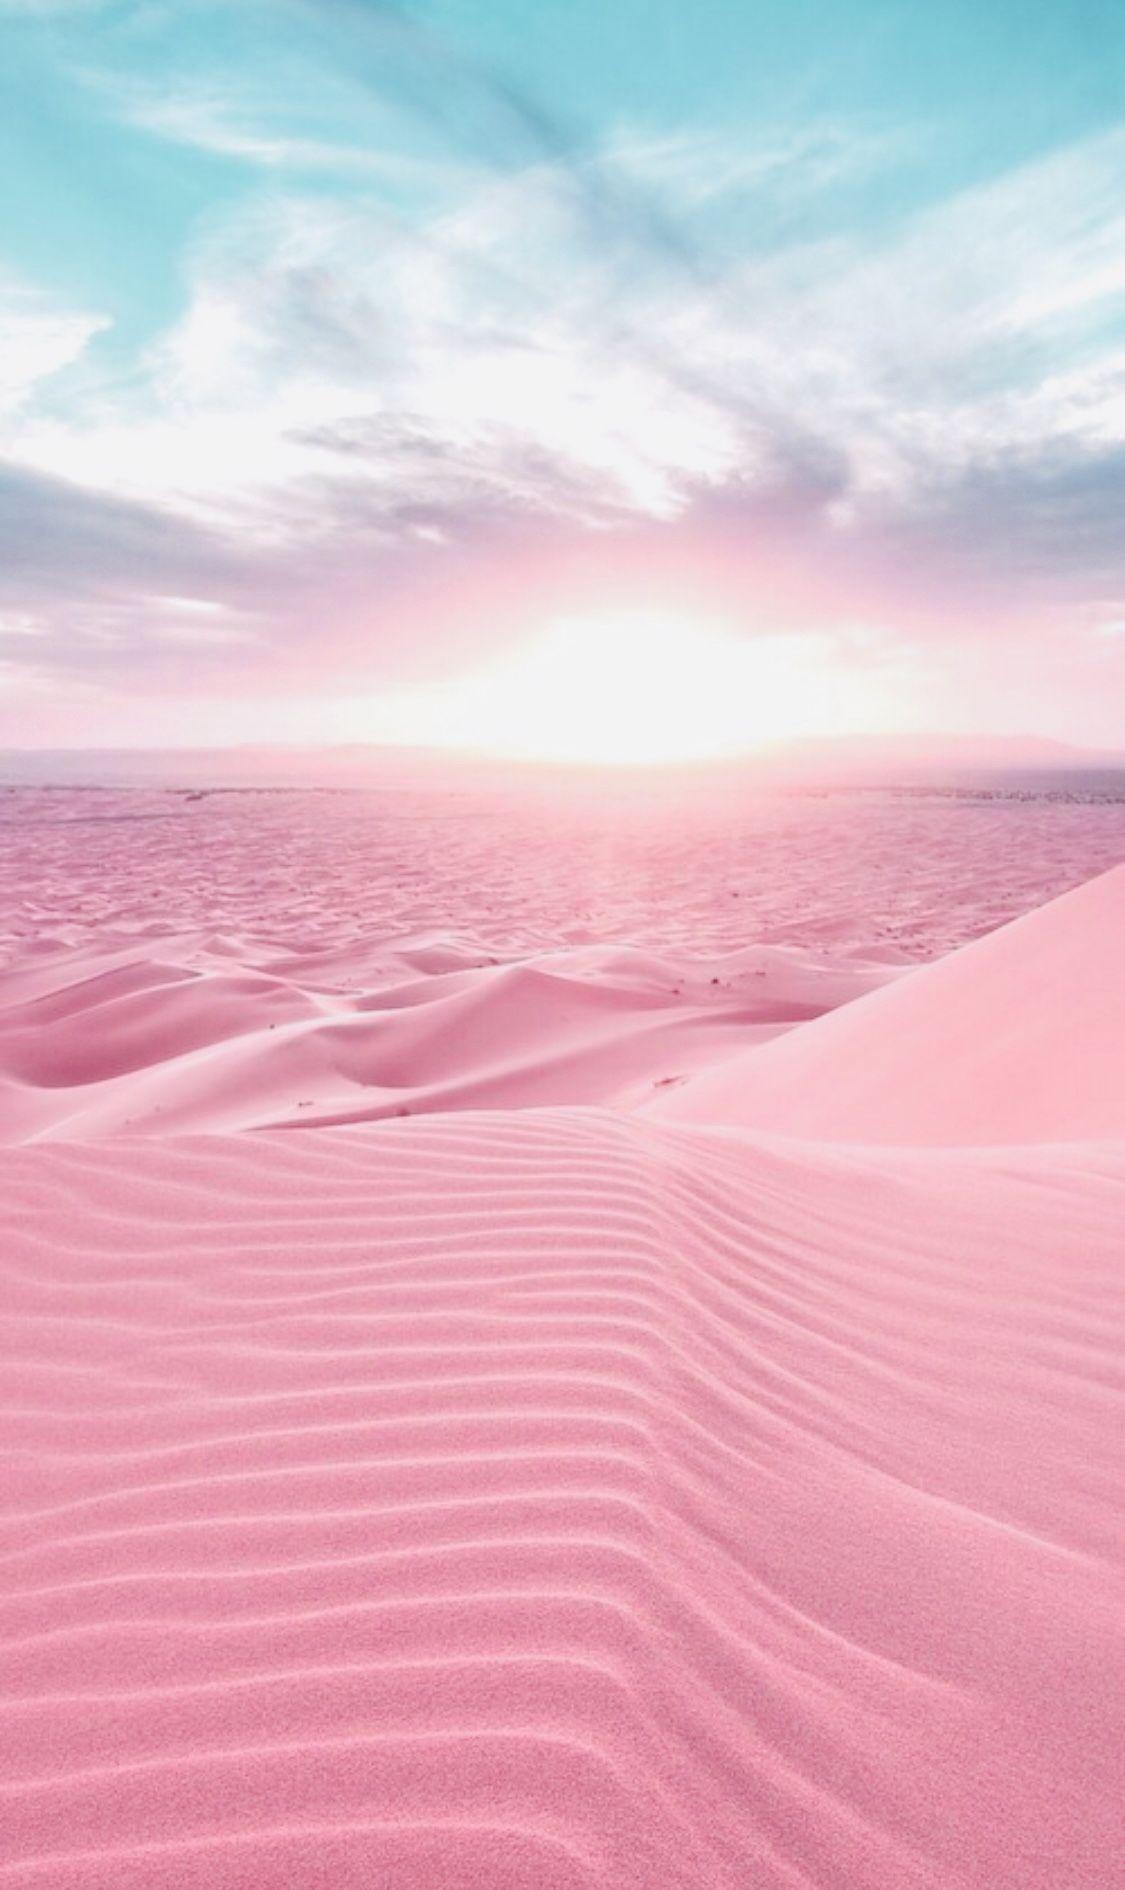 iPhone Wallpaper. Sand, Pink, Sky, Desert, Natural environment, Dune